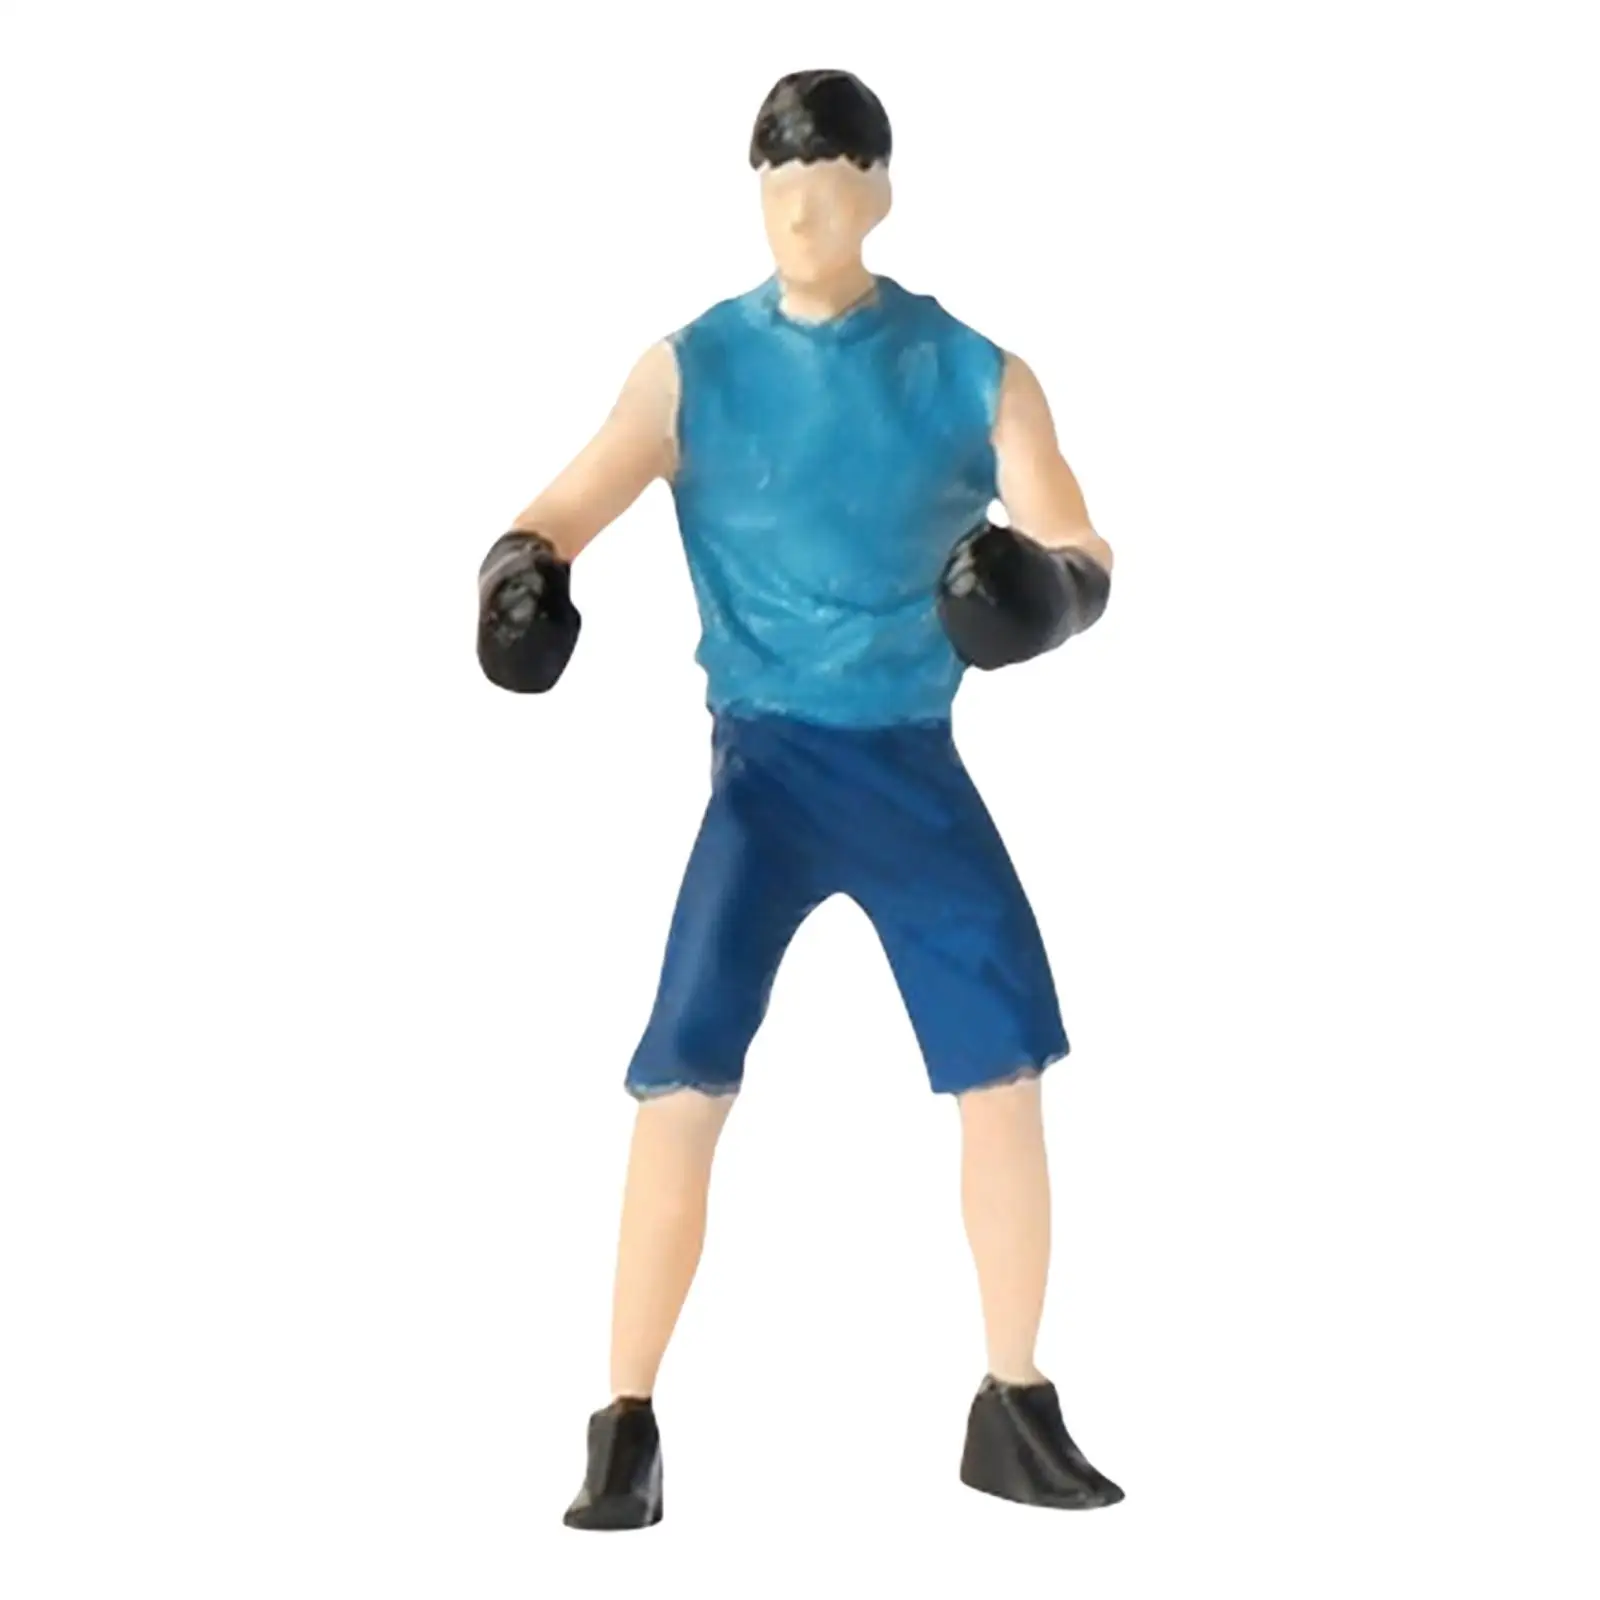 1/64 Scale Models Figurine Boxing Man People Figures for DIY Scene Decor